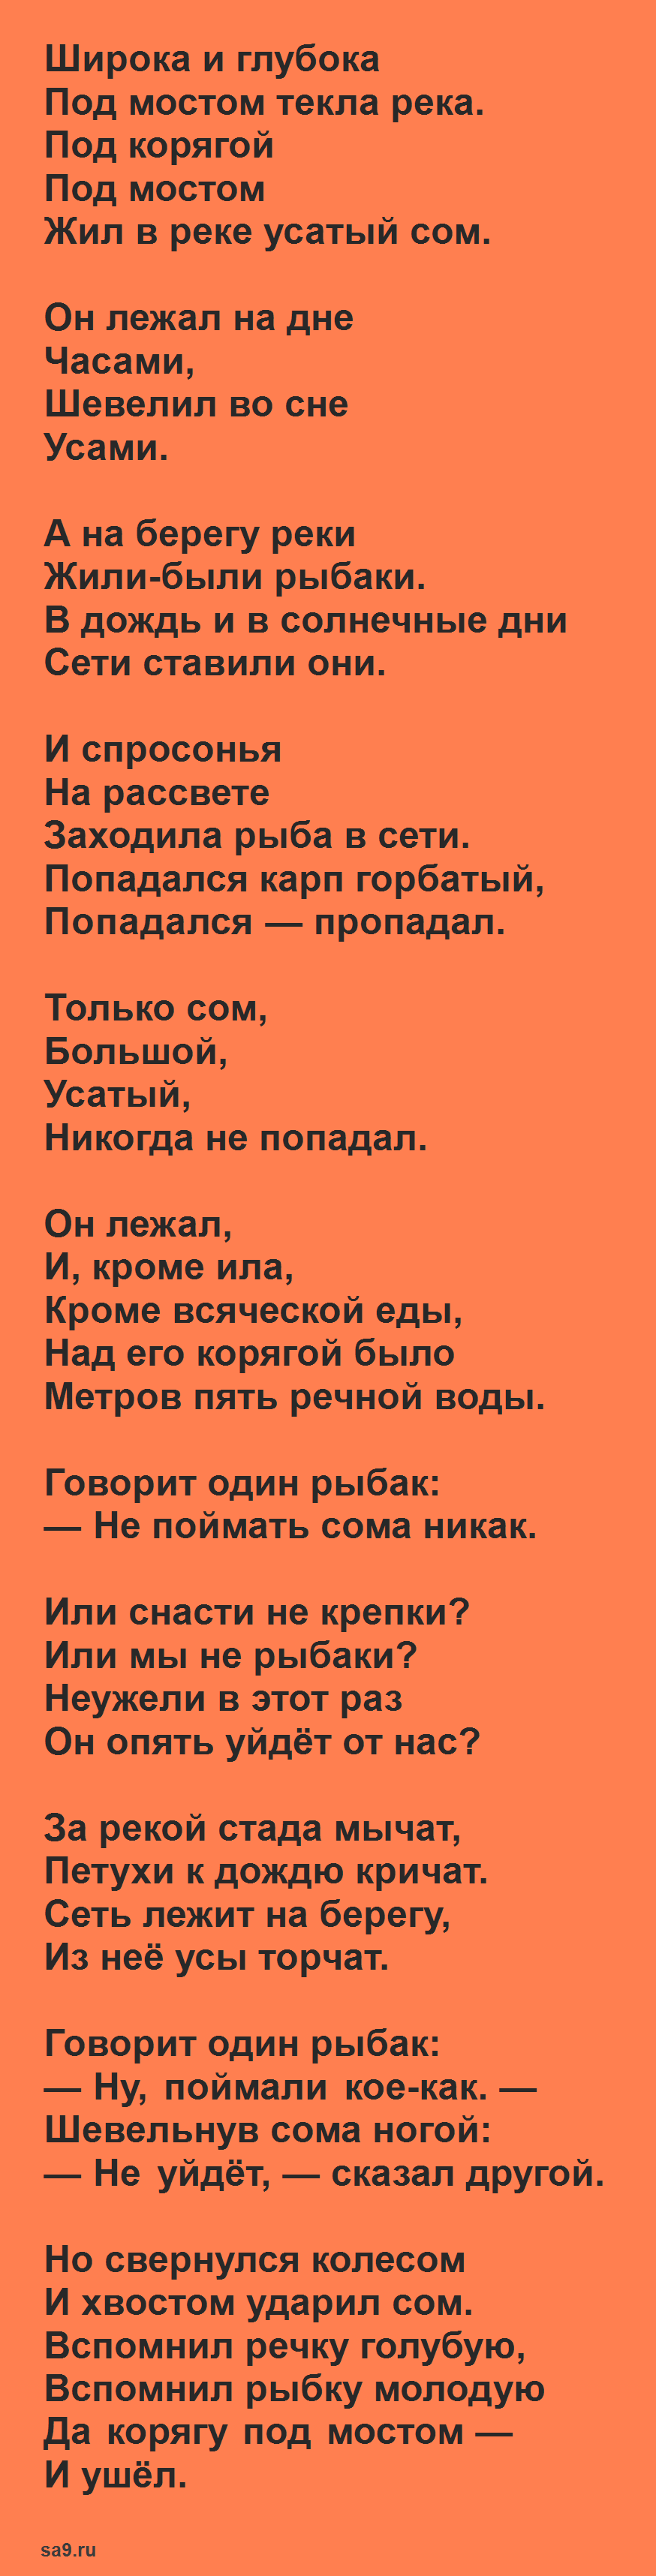 Михалков стихи 1 класс - Про сома